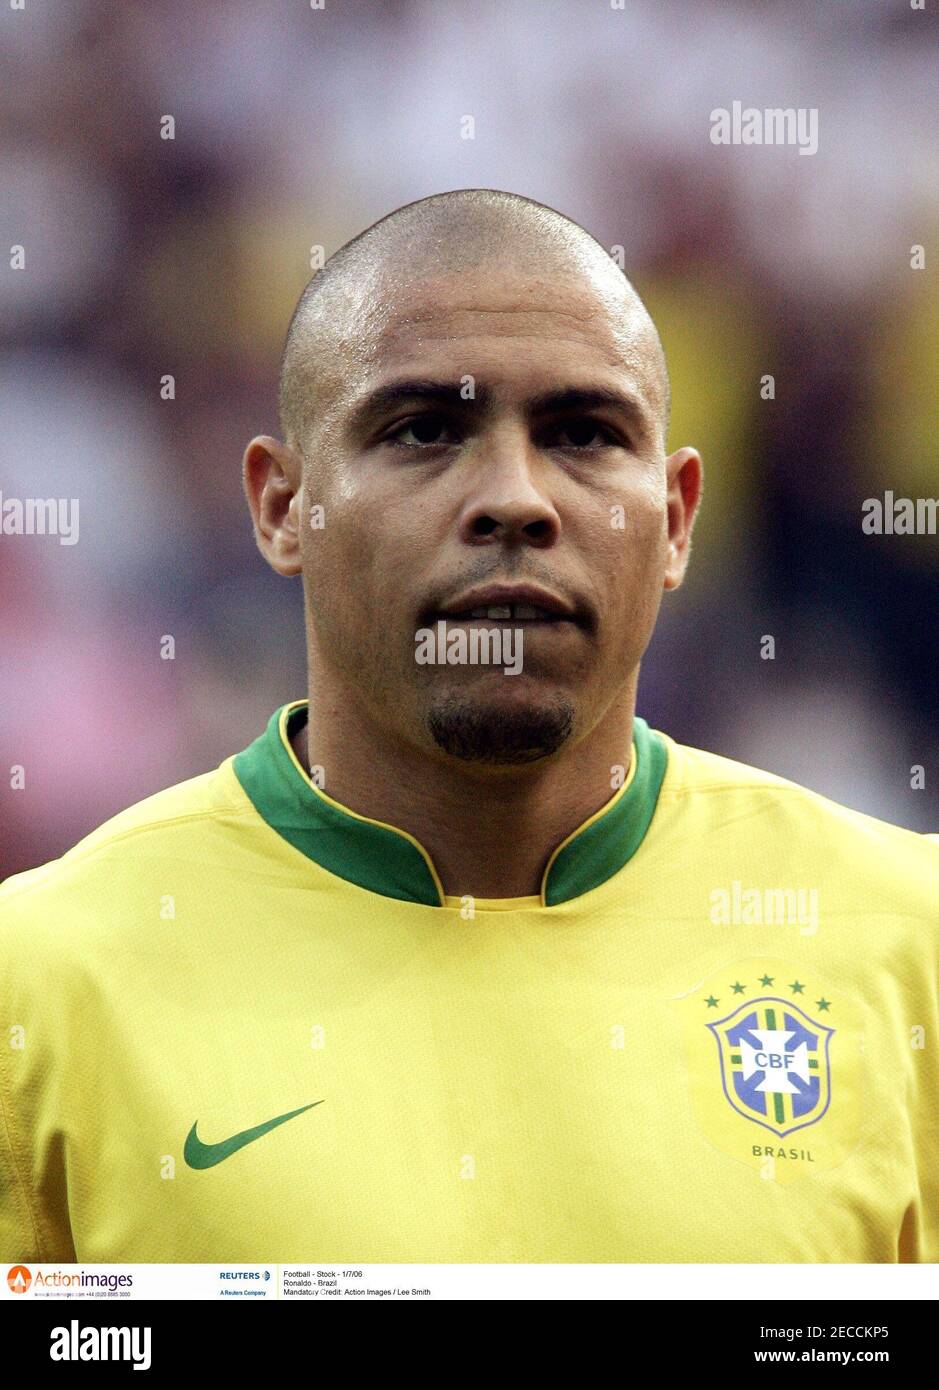 Ronaldo Of Brazil Stockfotos und -bilder Kaufen - Alamy